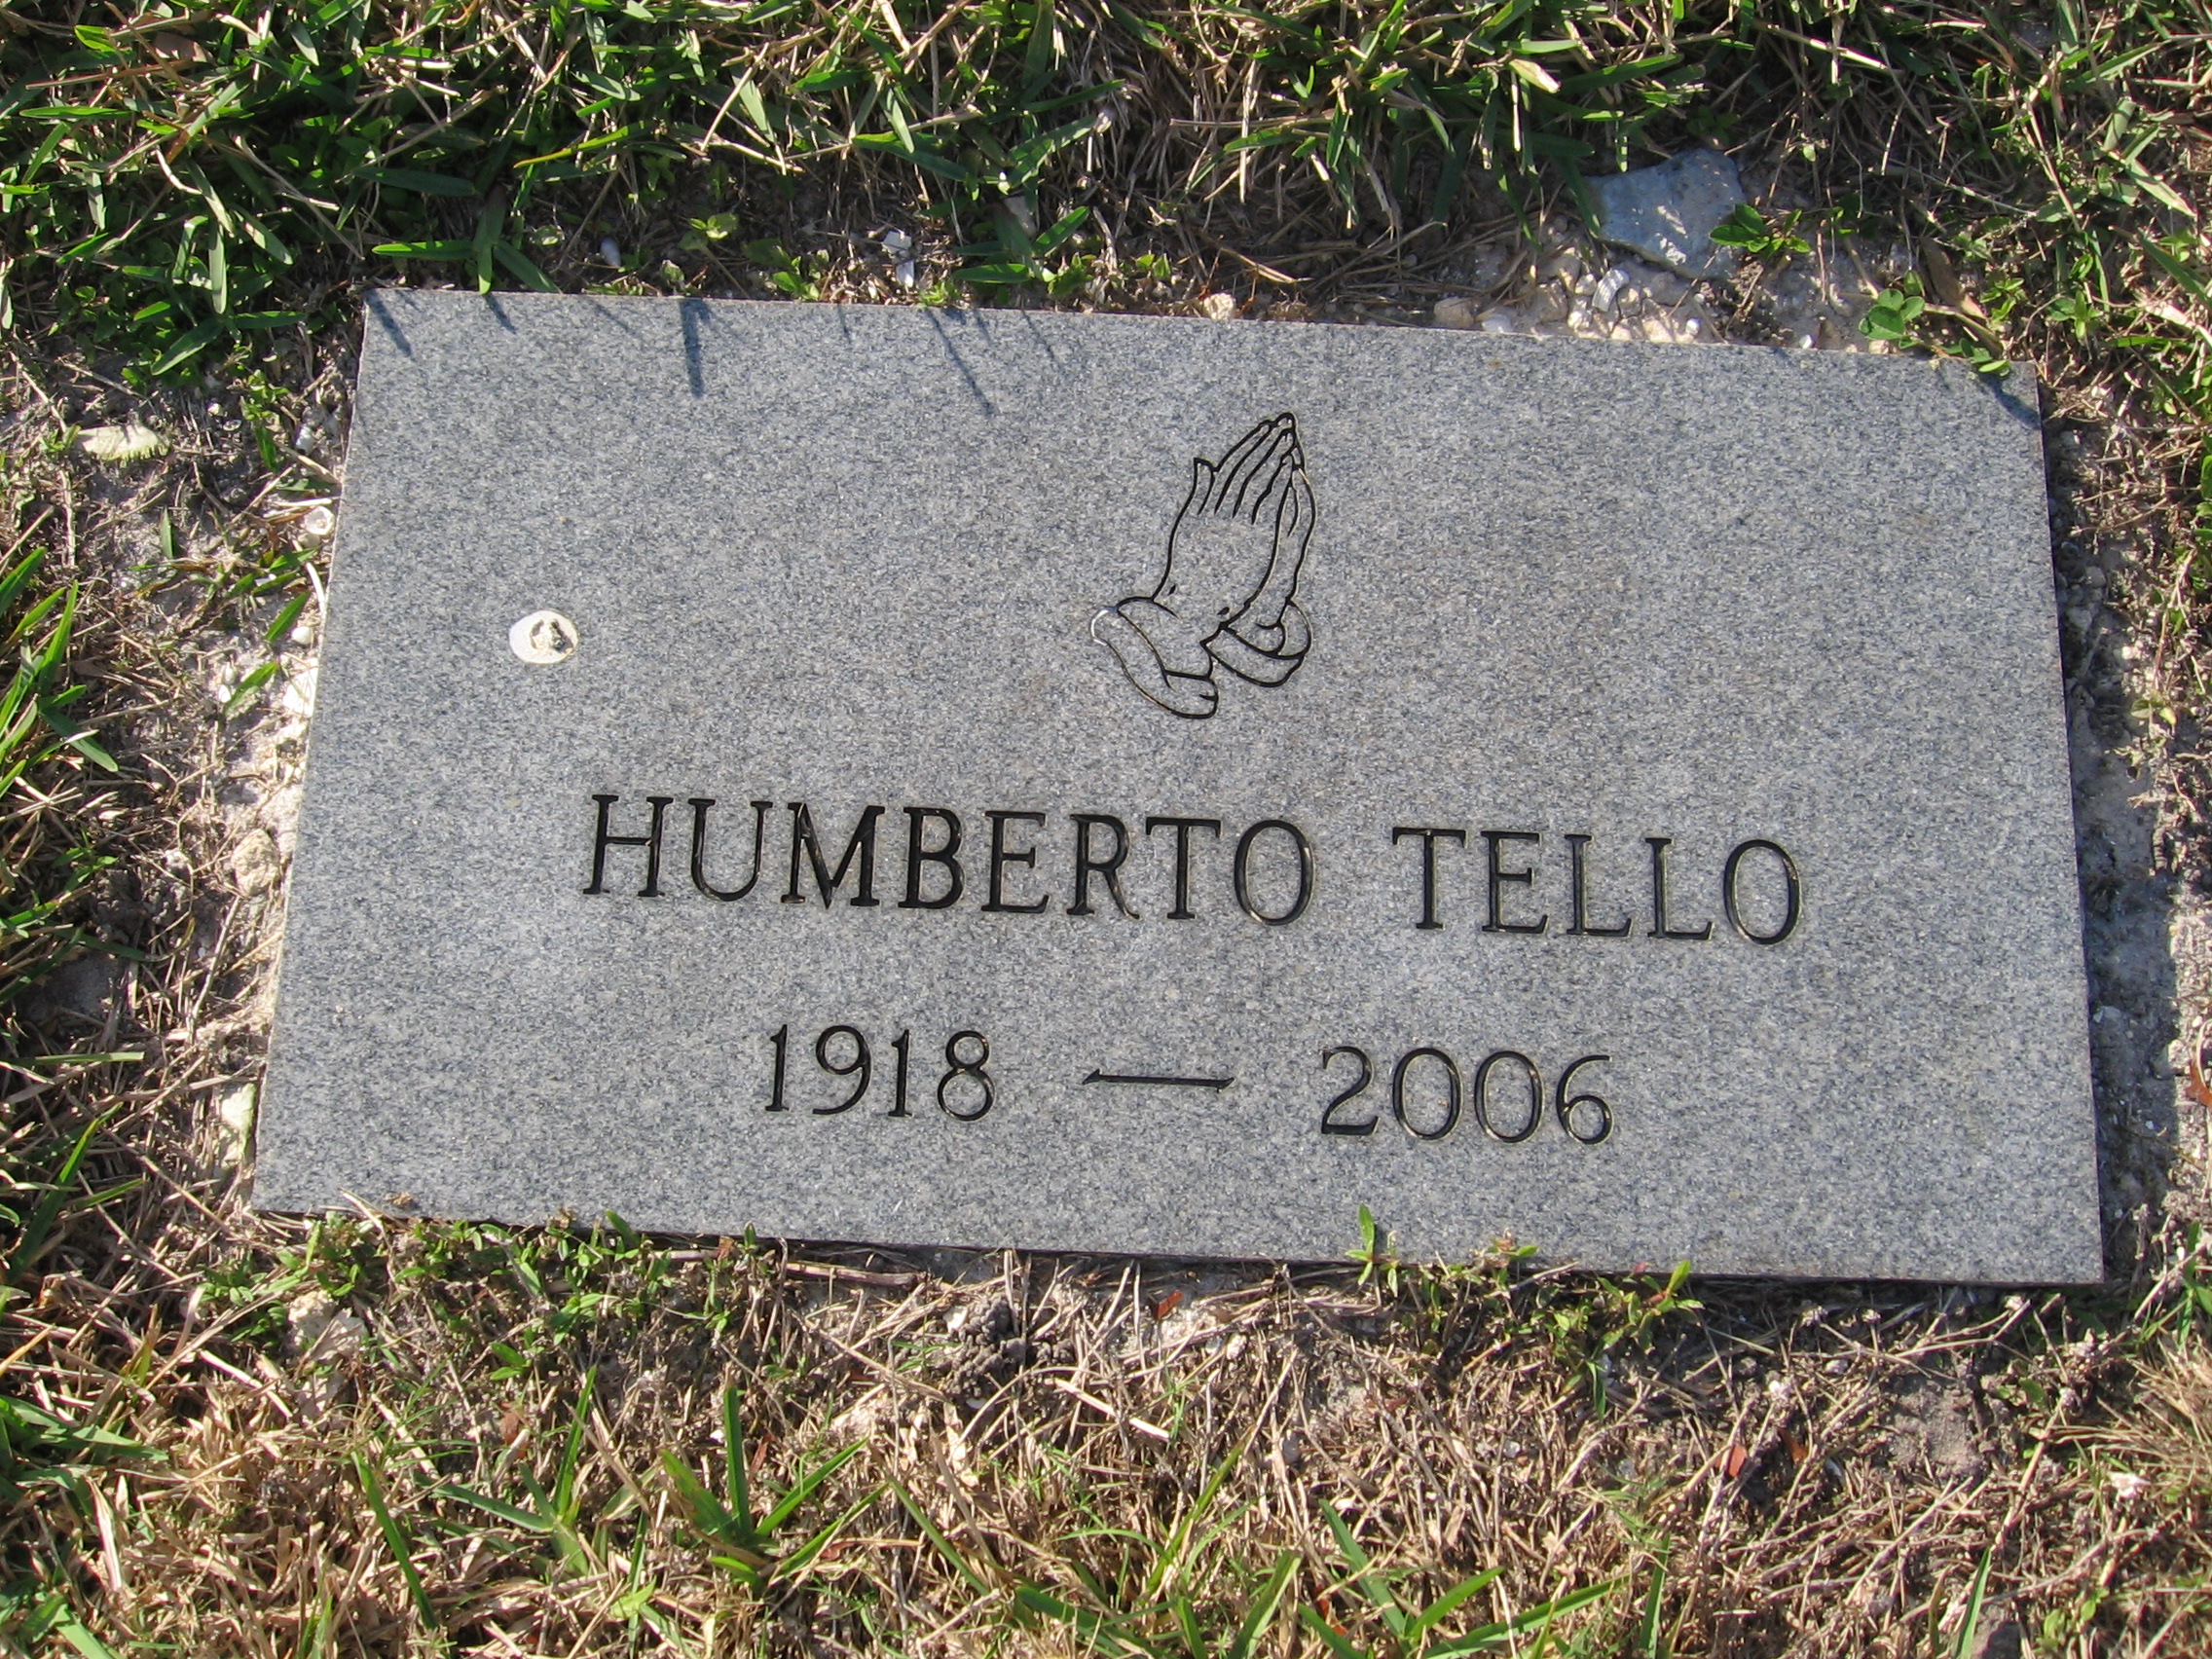 Humberto Tello